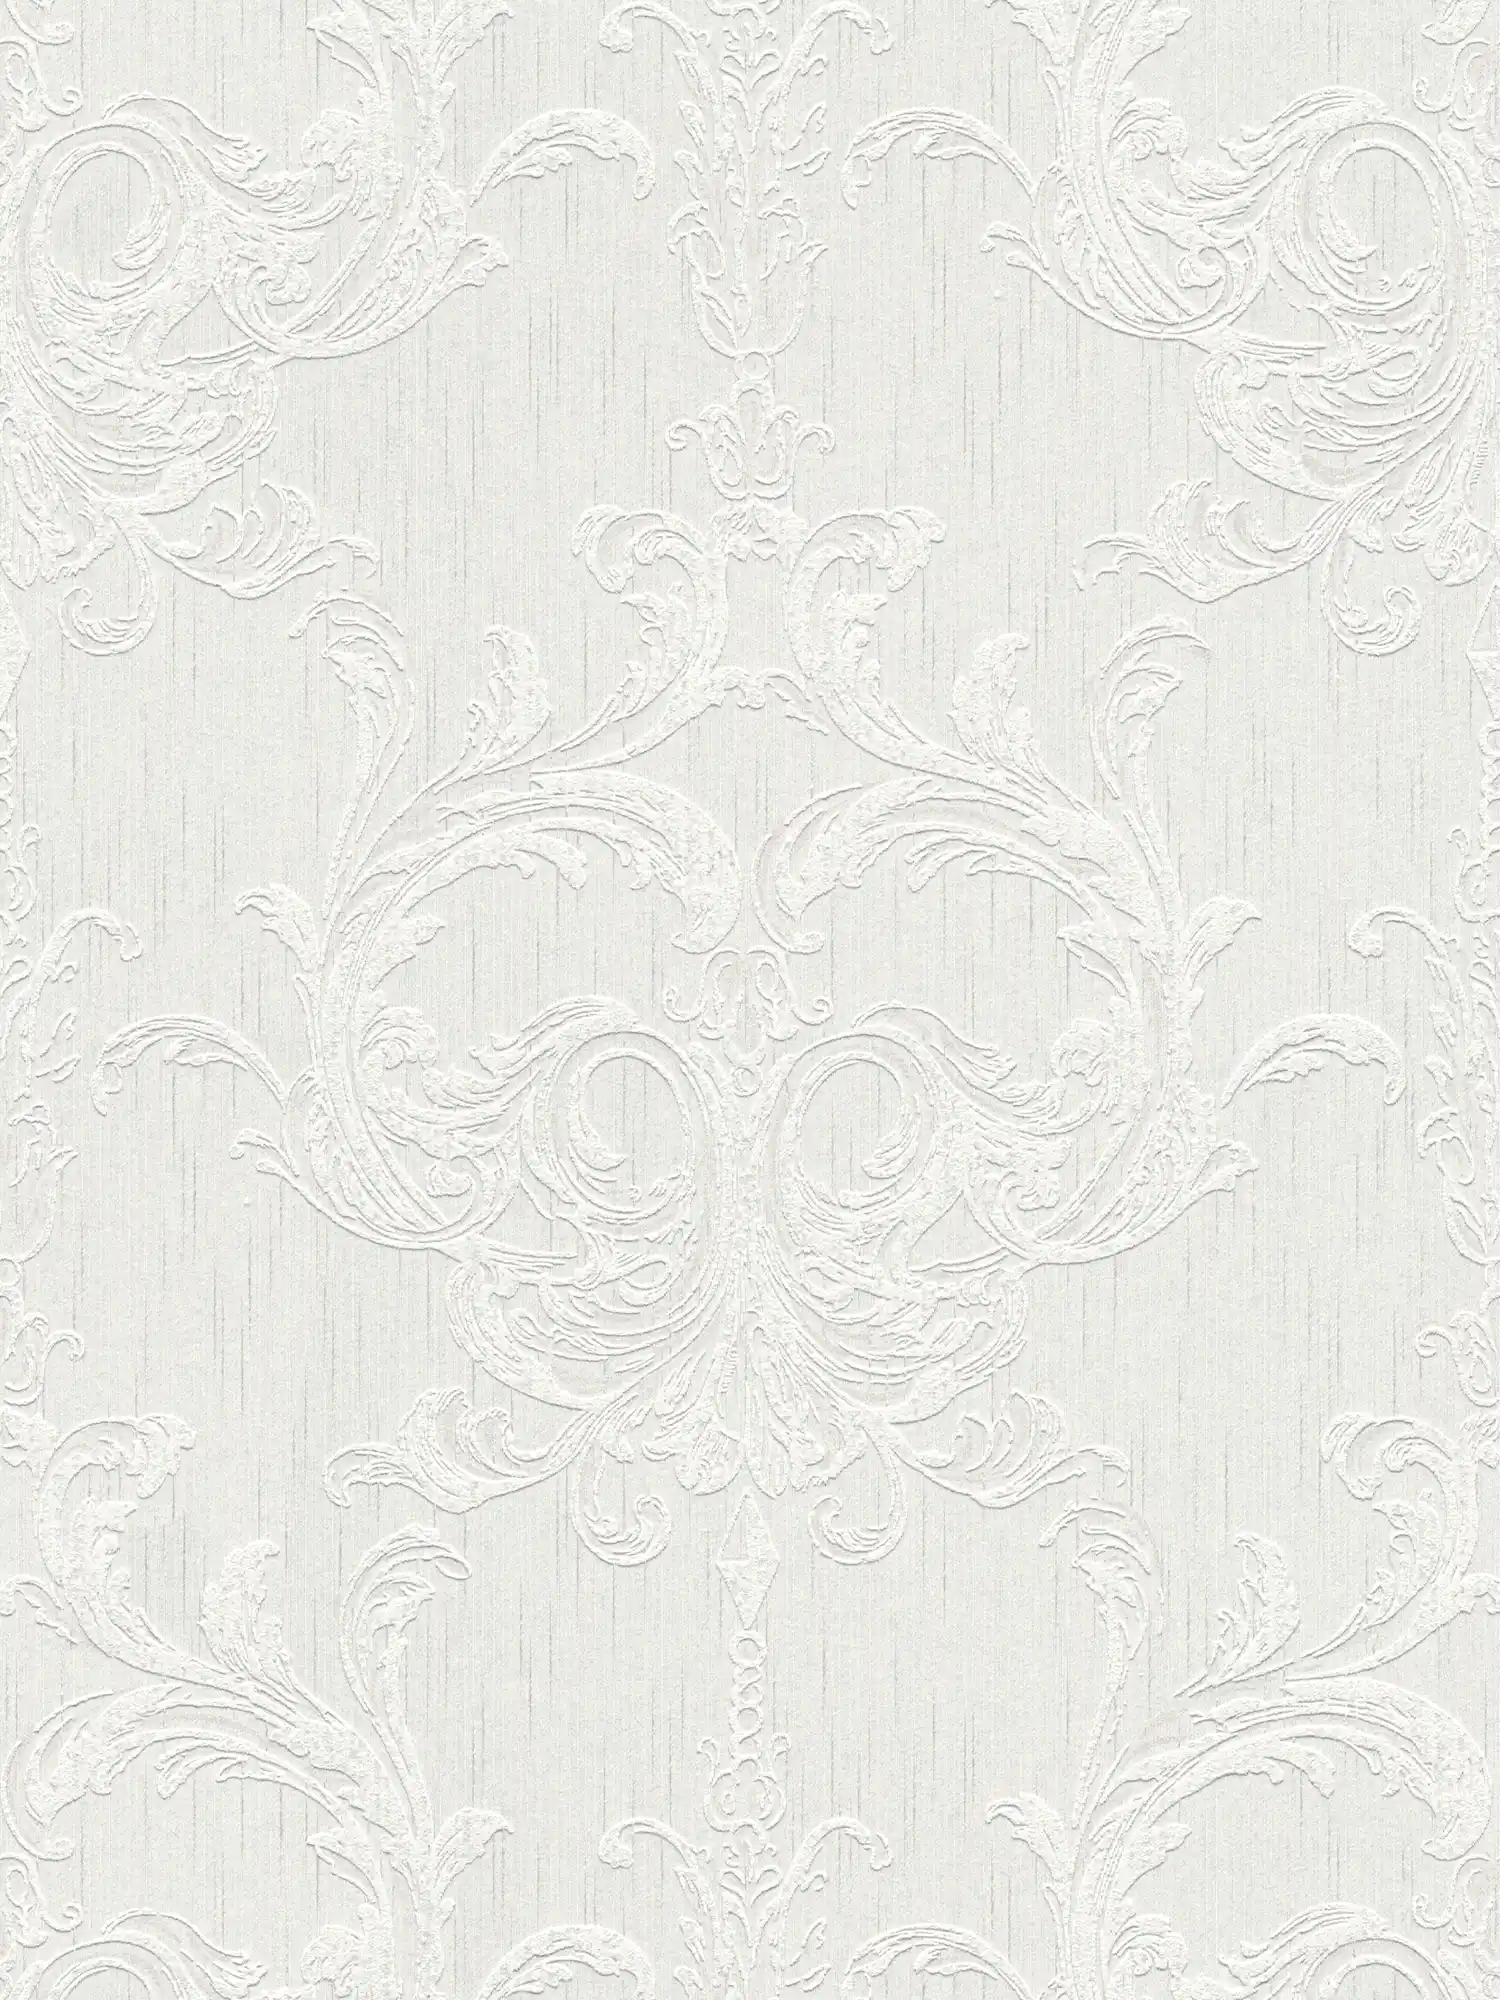         Ornamenttapete mit Stuck Design & Putzoptik – Grau, Weiß
    